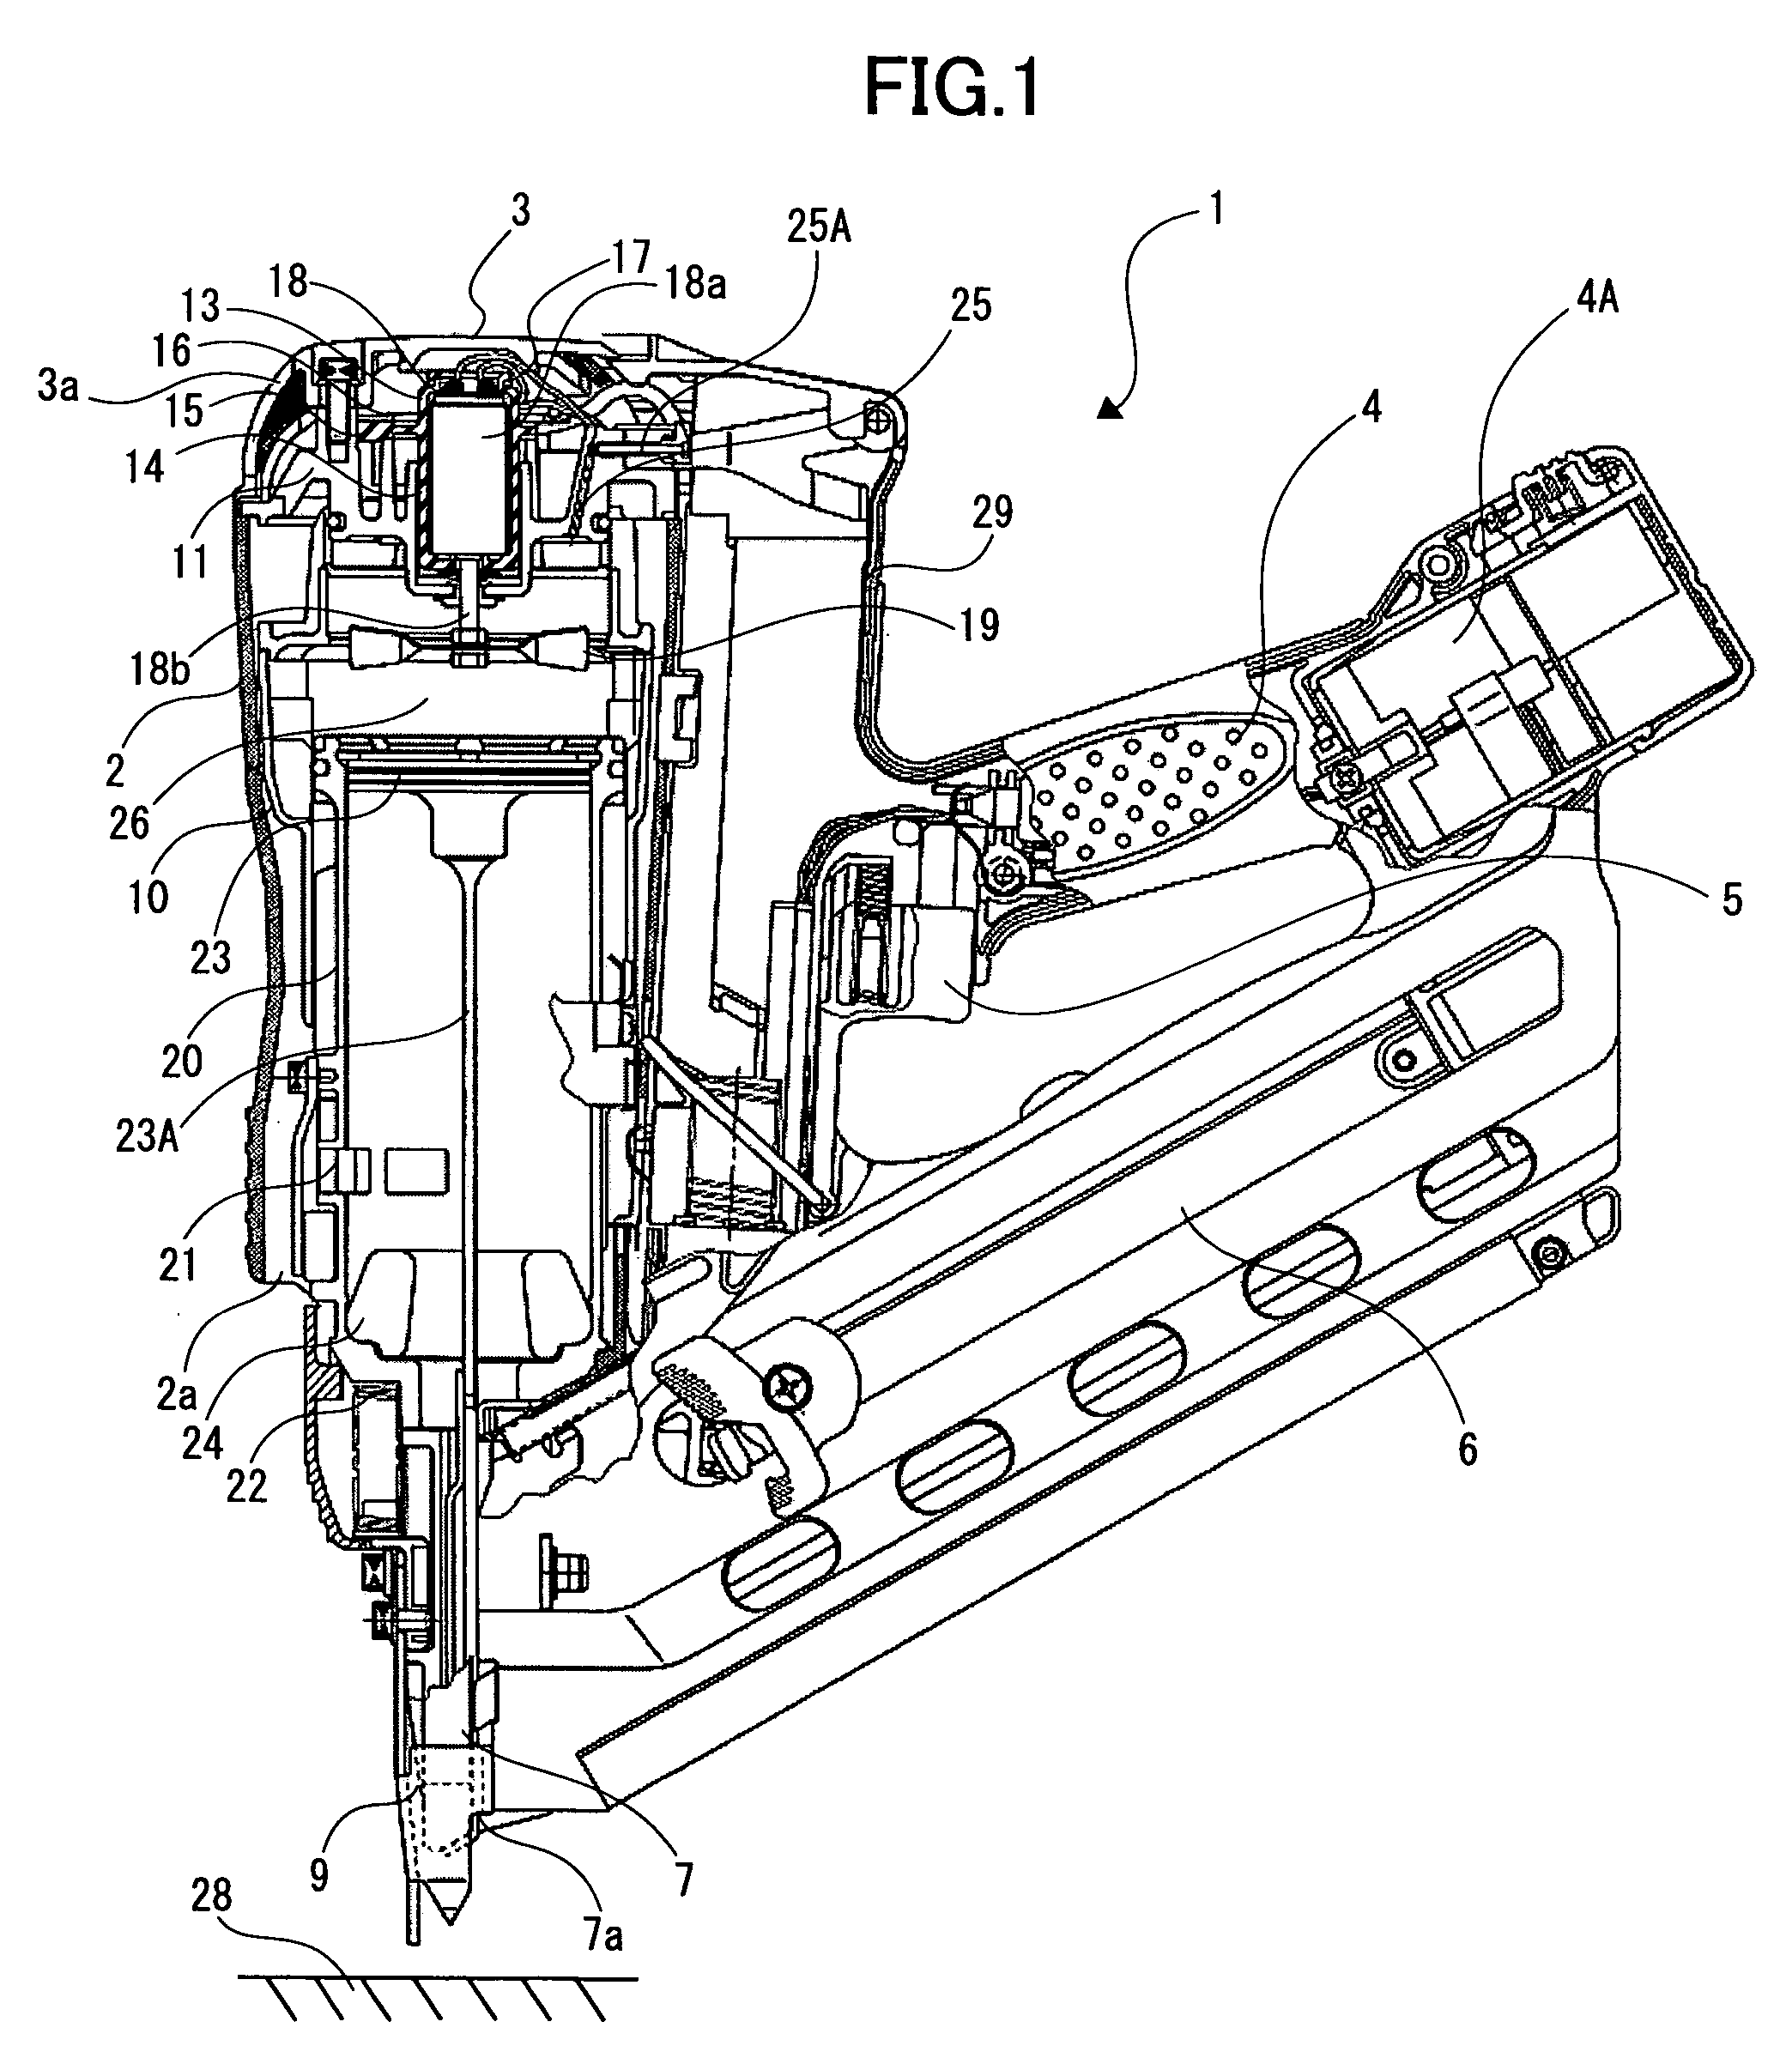 Combustion type power tool having motor suspension arrangement